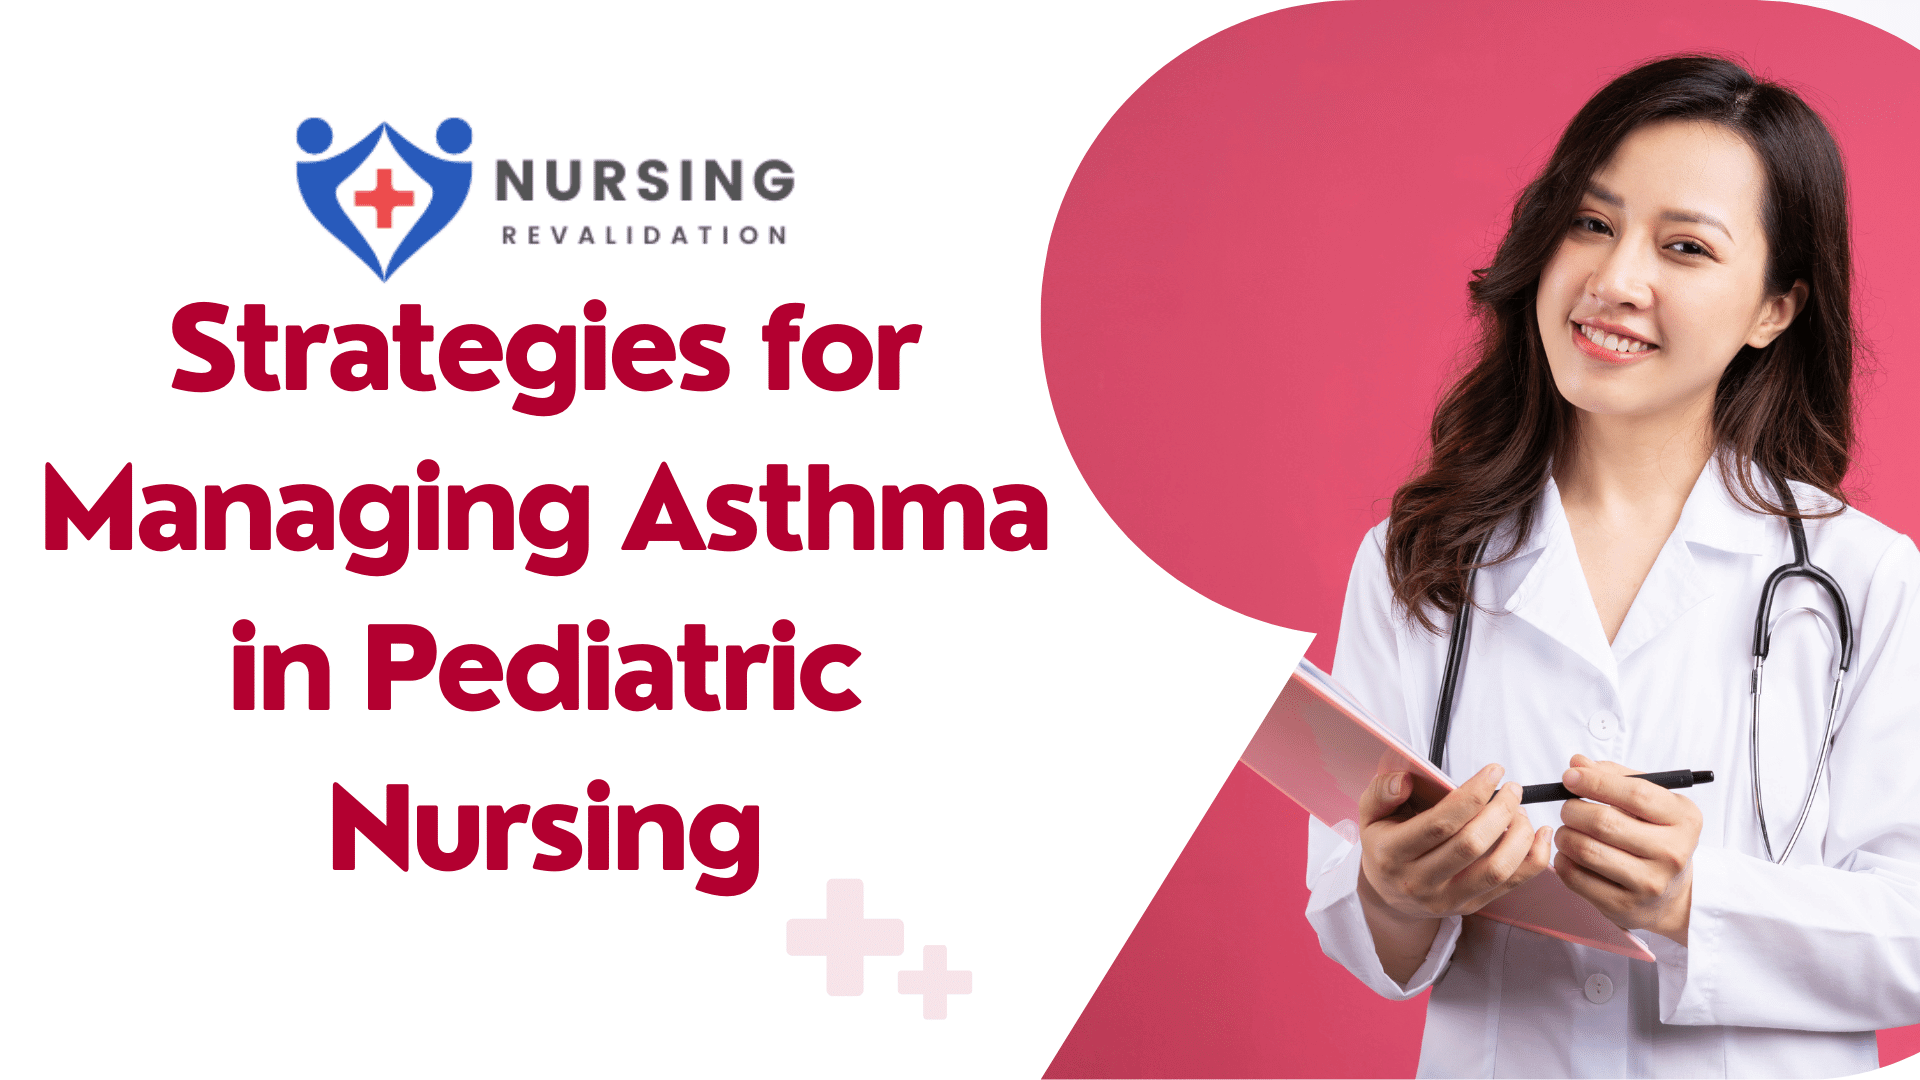 Strategies for Managing Asthma in Pediatric Nursing